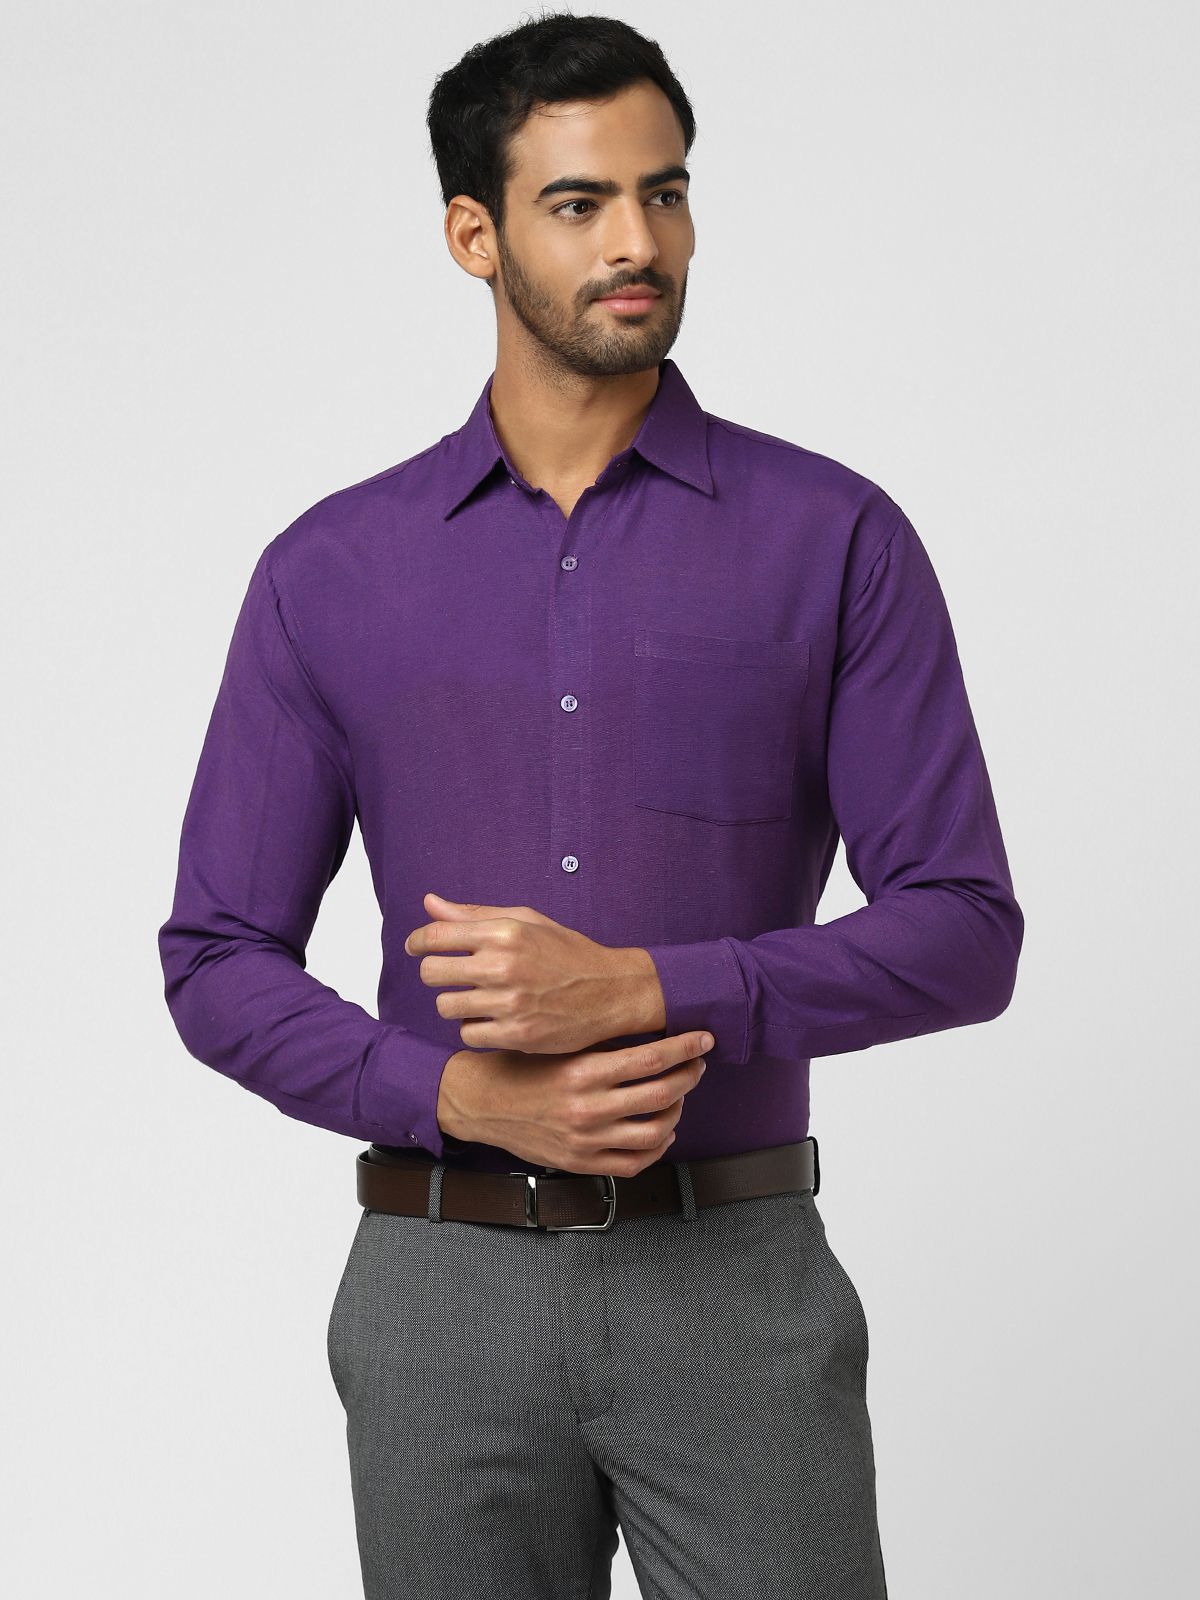     			DESHBANDHU DBK - Purple Cotton Regular Fit Men's Casual Shirt (Pack of 1 )